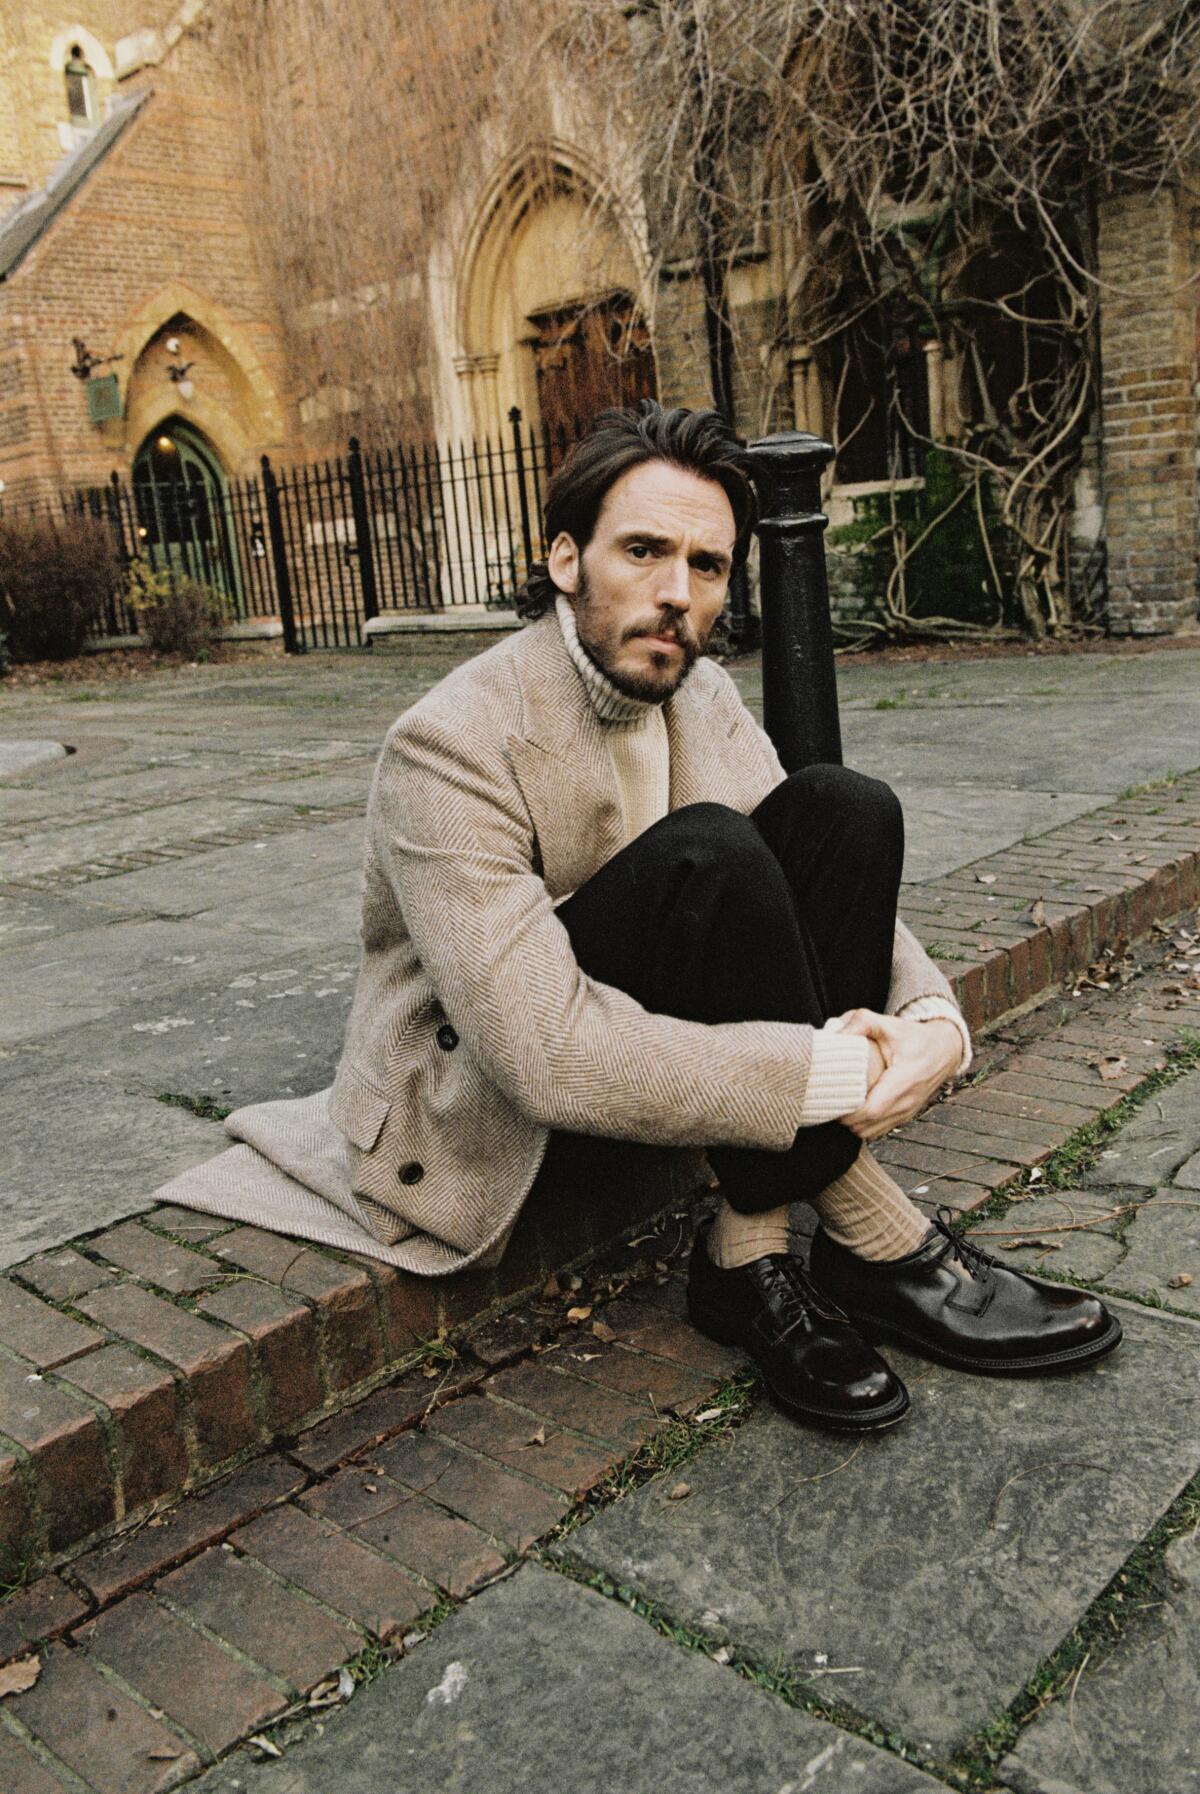 A bearded man (actor Sam Claflin) in a brown tweed jacket sits on a brick curb.